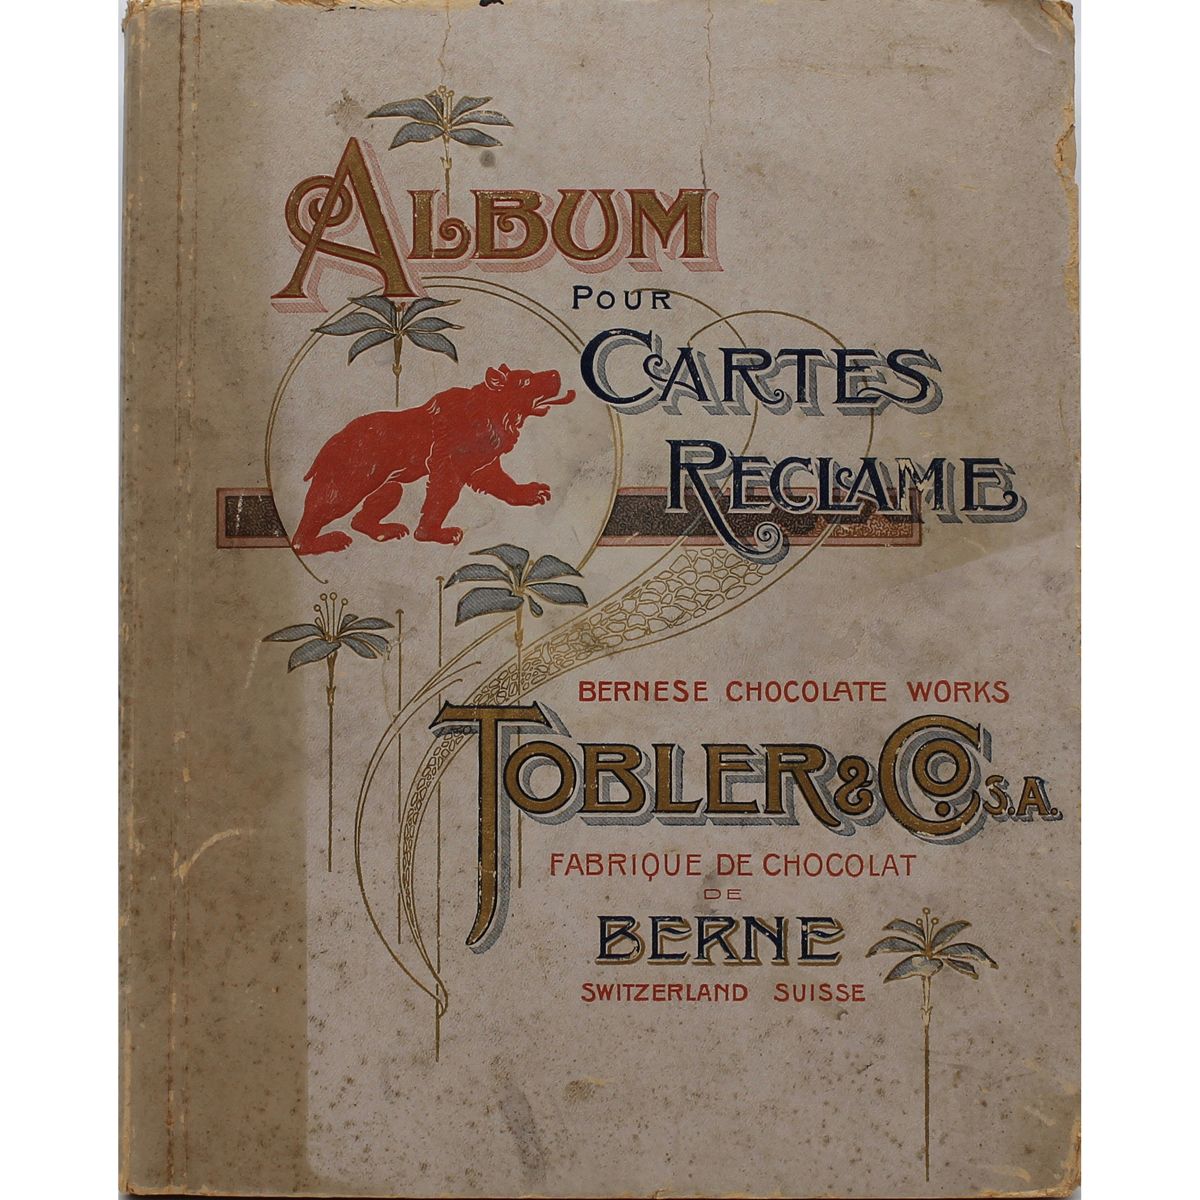 ALBUM POUR CARTES RECLAME "Tobler & Co." 20世纪初
20世纪初